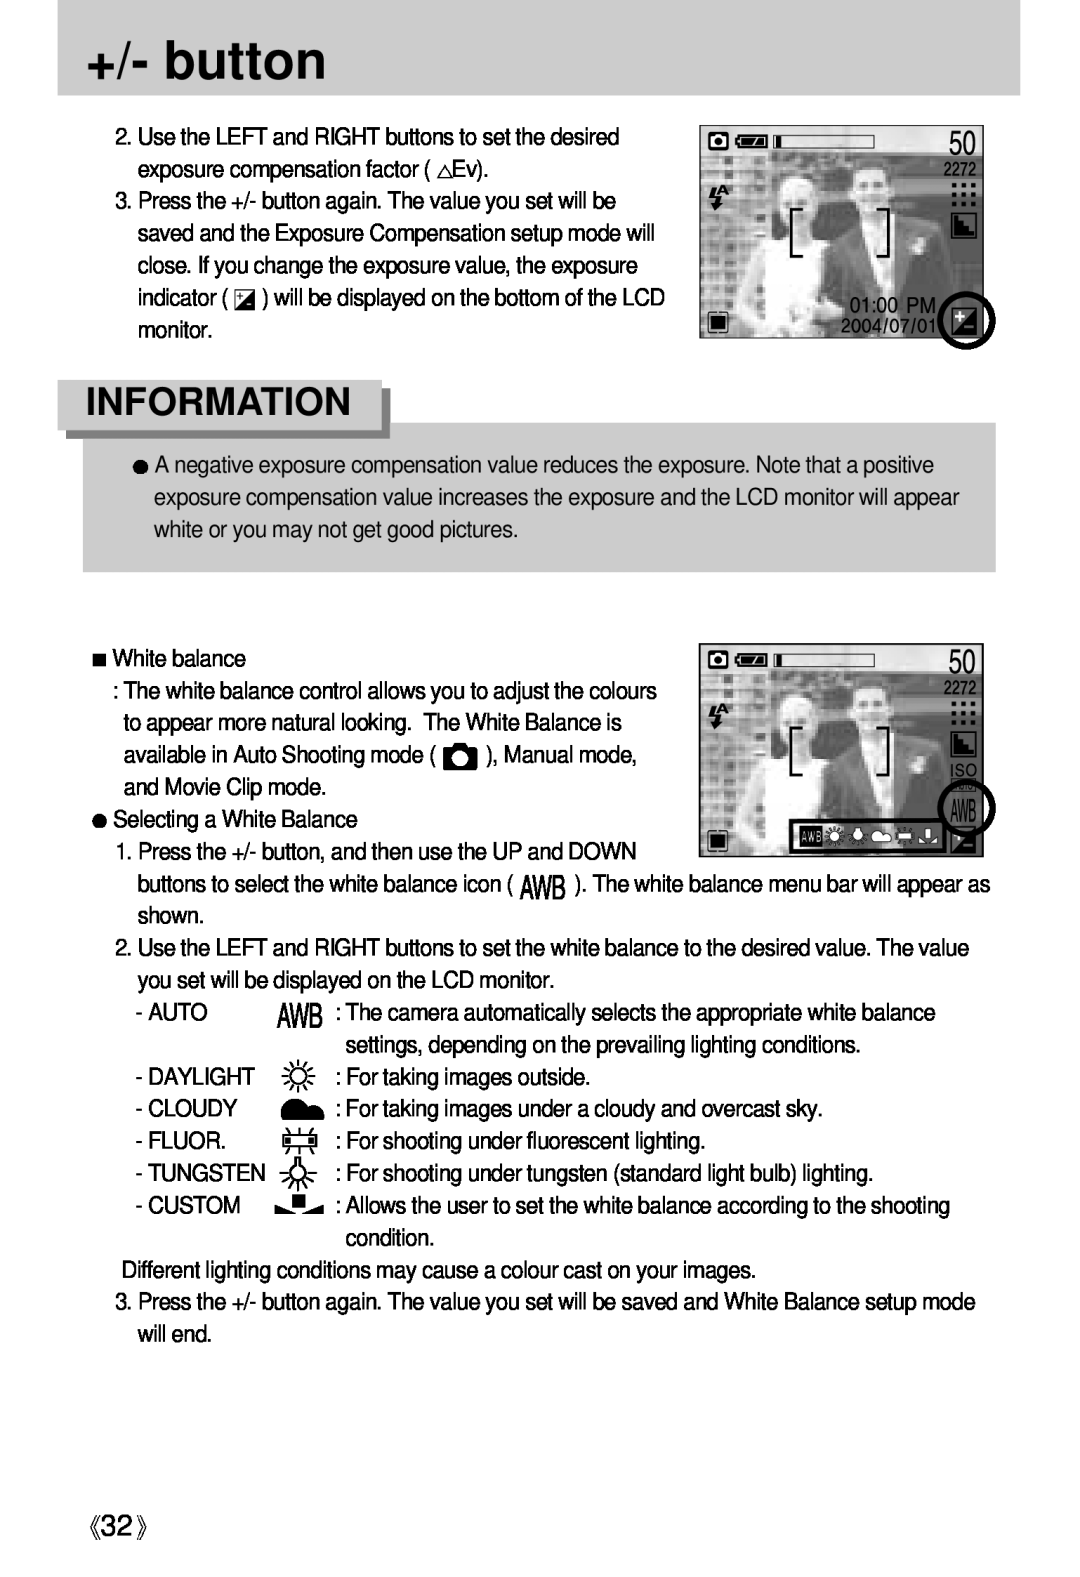 Samsung Digimax U-CA user manual +/- button, Information 